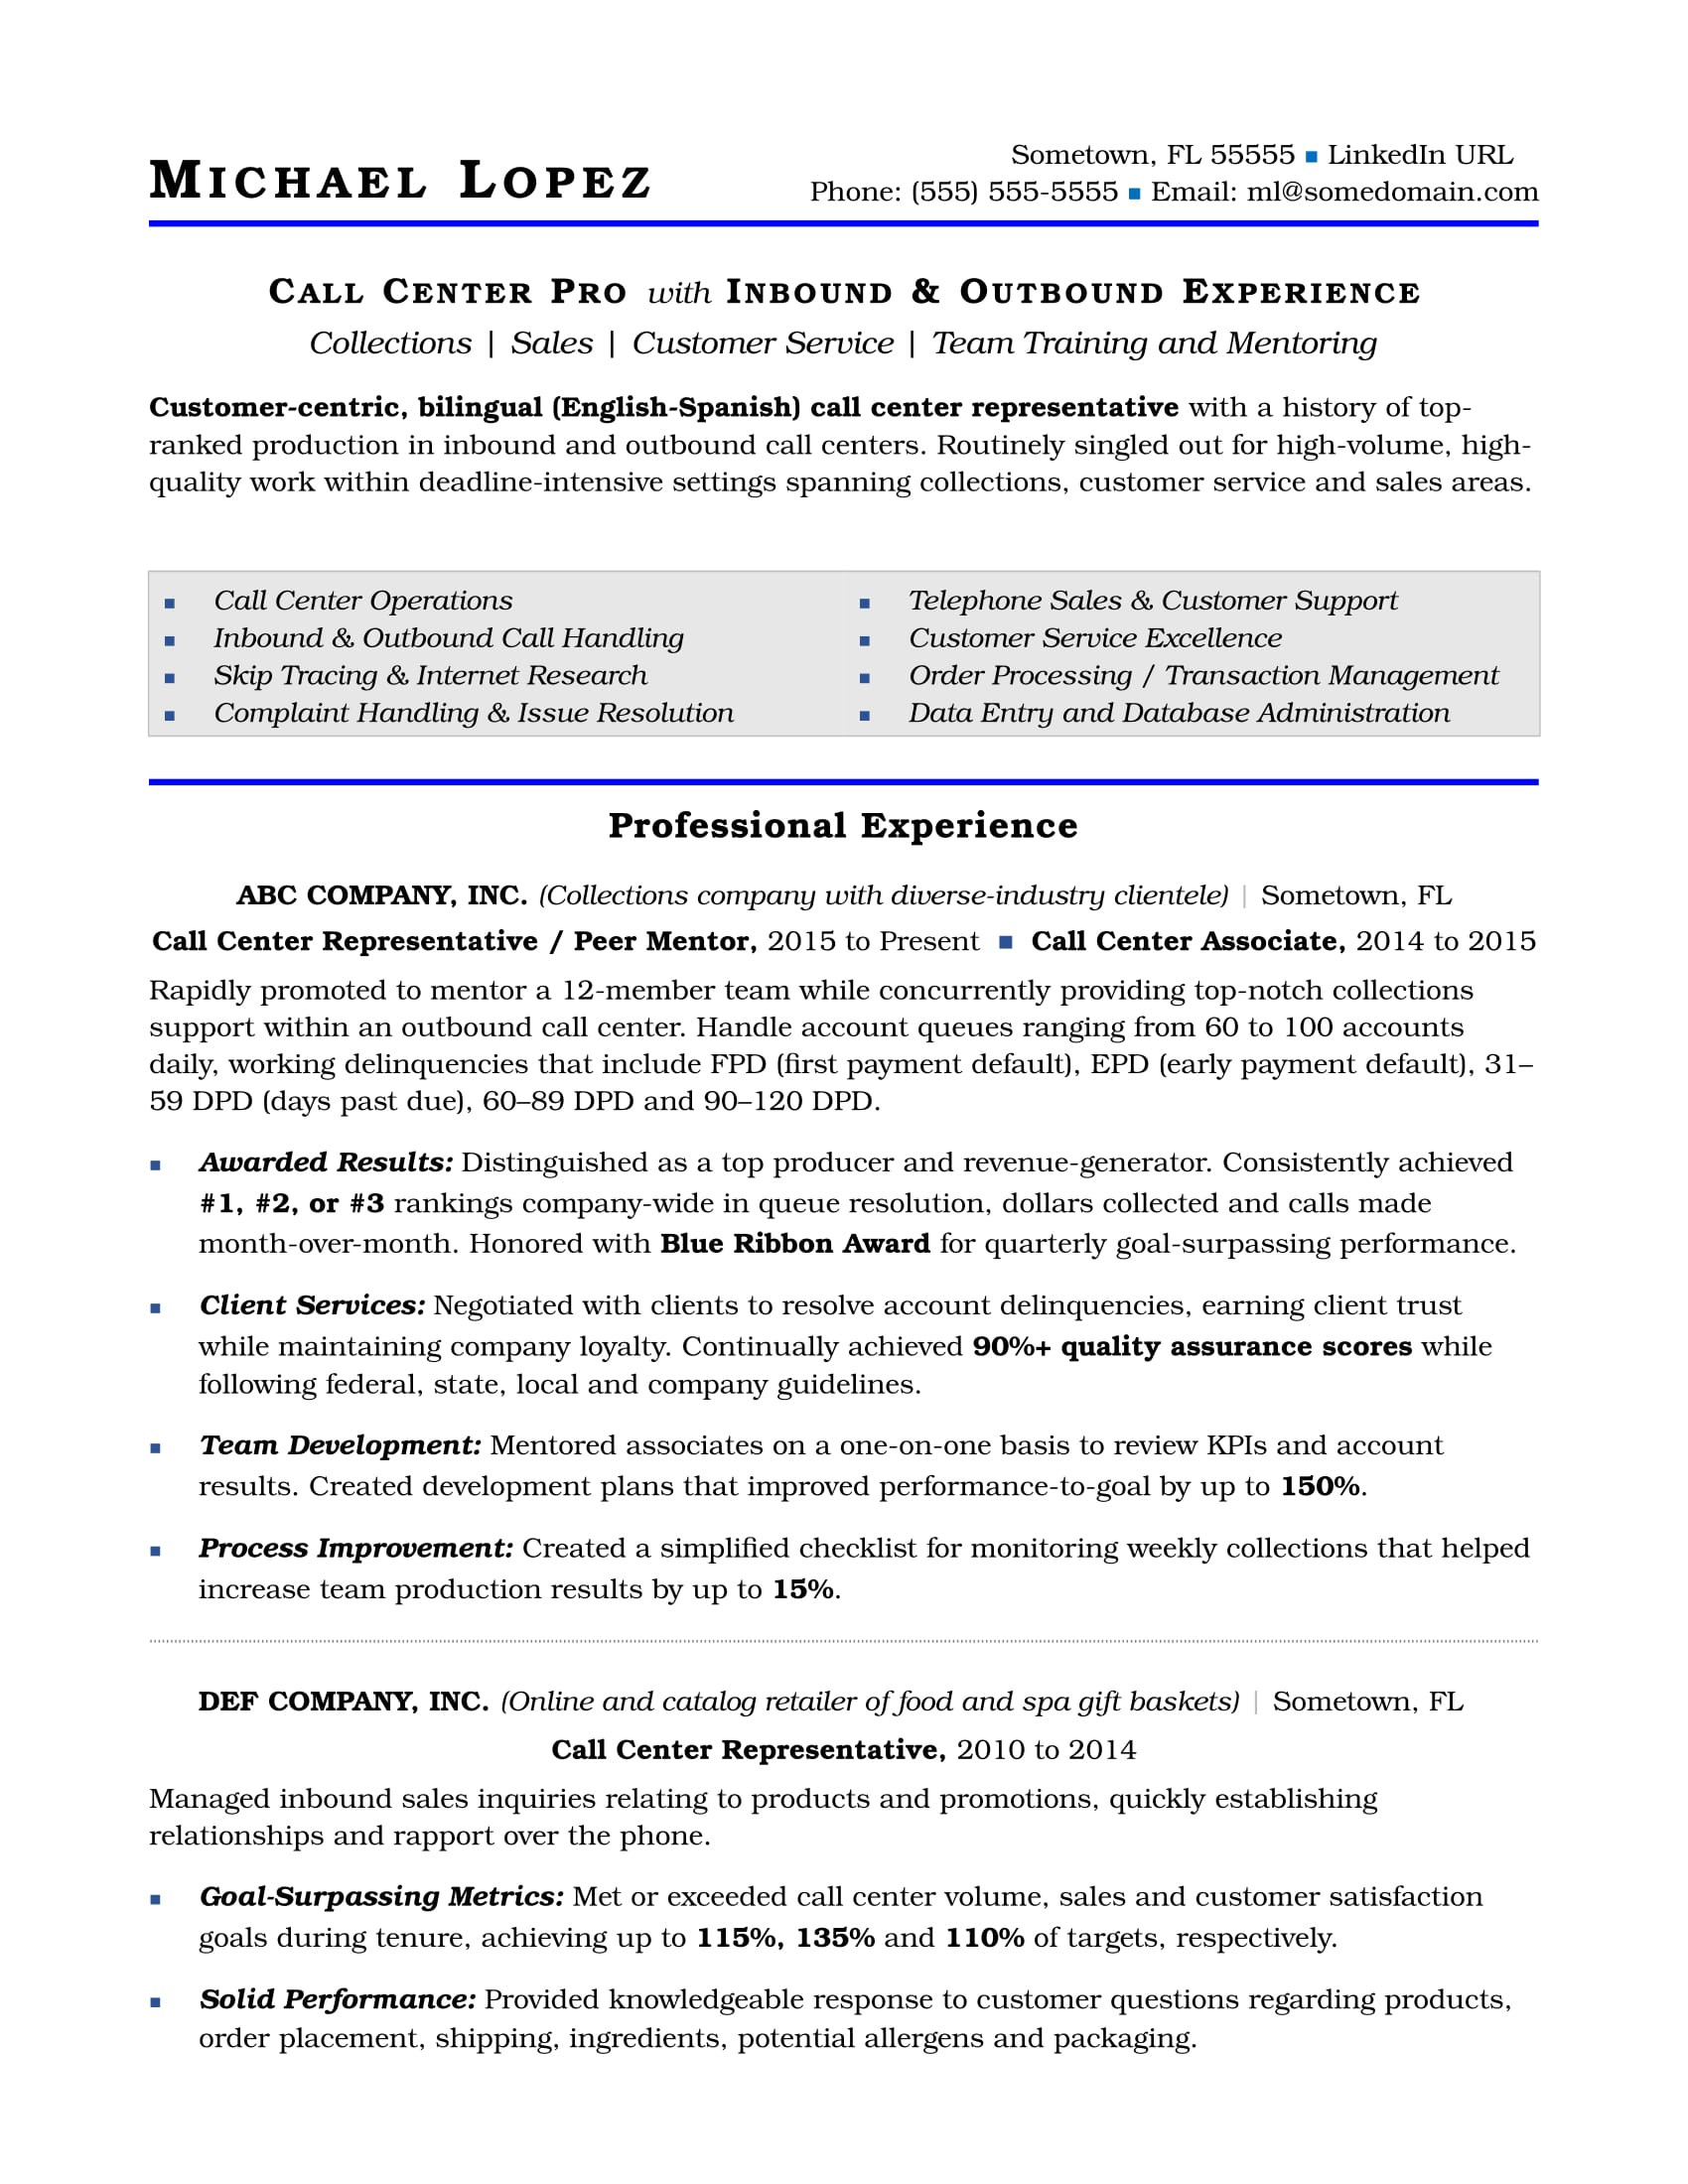 Customer Service Representative Job Description Resume Sample Call Center Resume Sample Monster.com